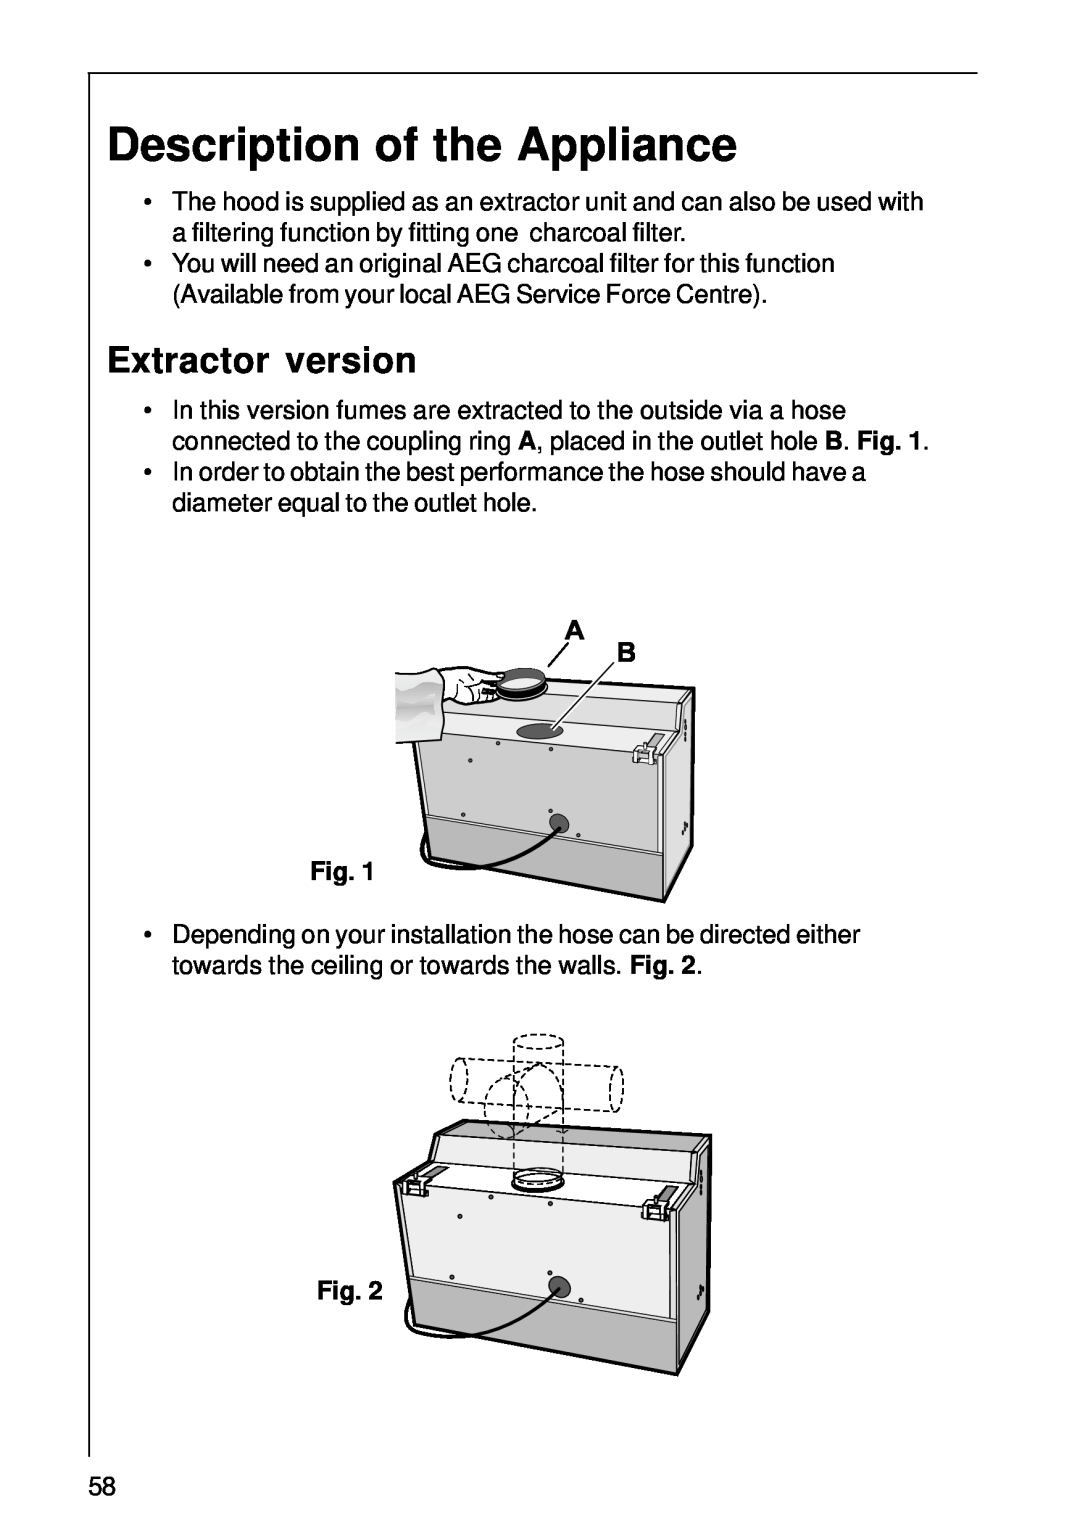 AEG DE 3160 installation instructions Description of the Appliance, Extractor version 